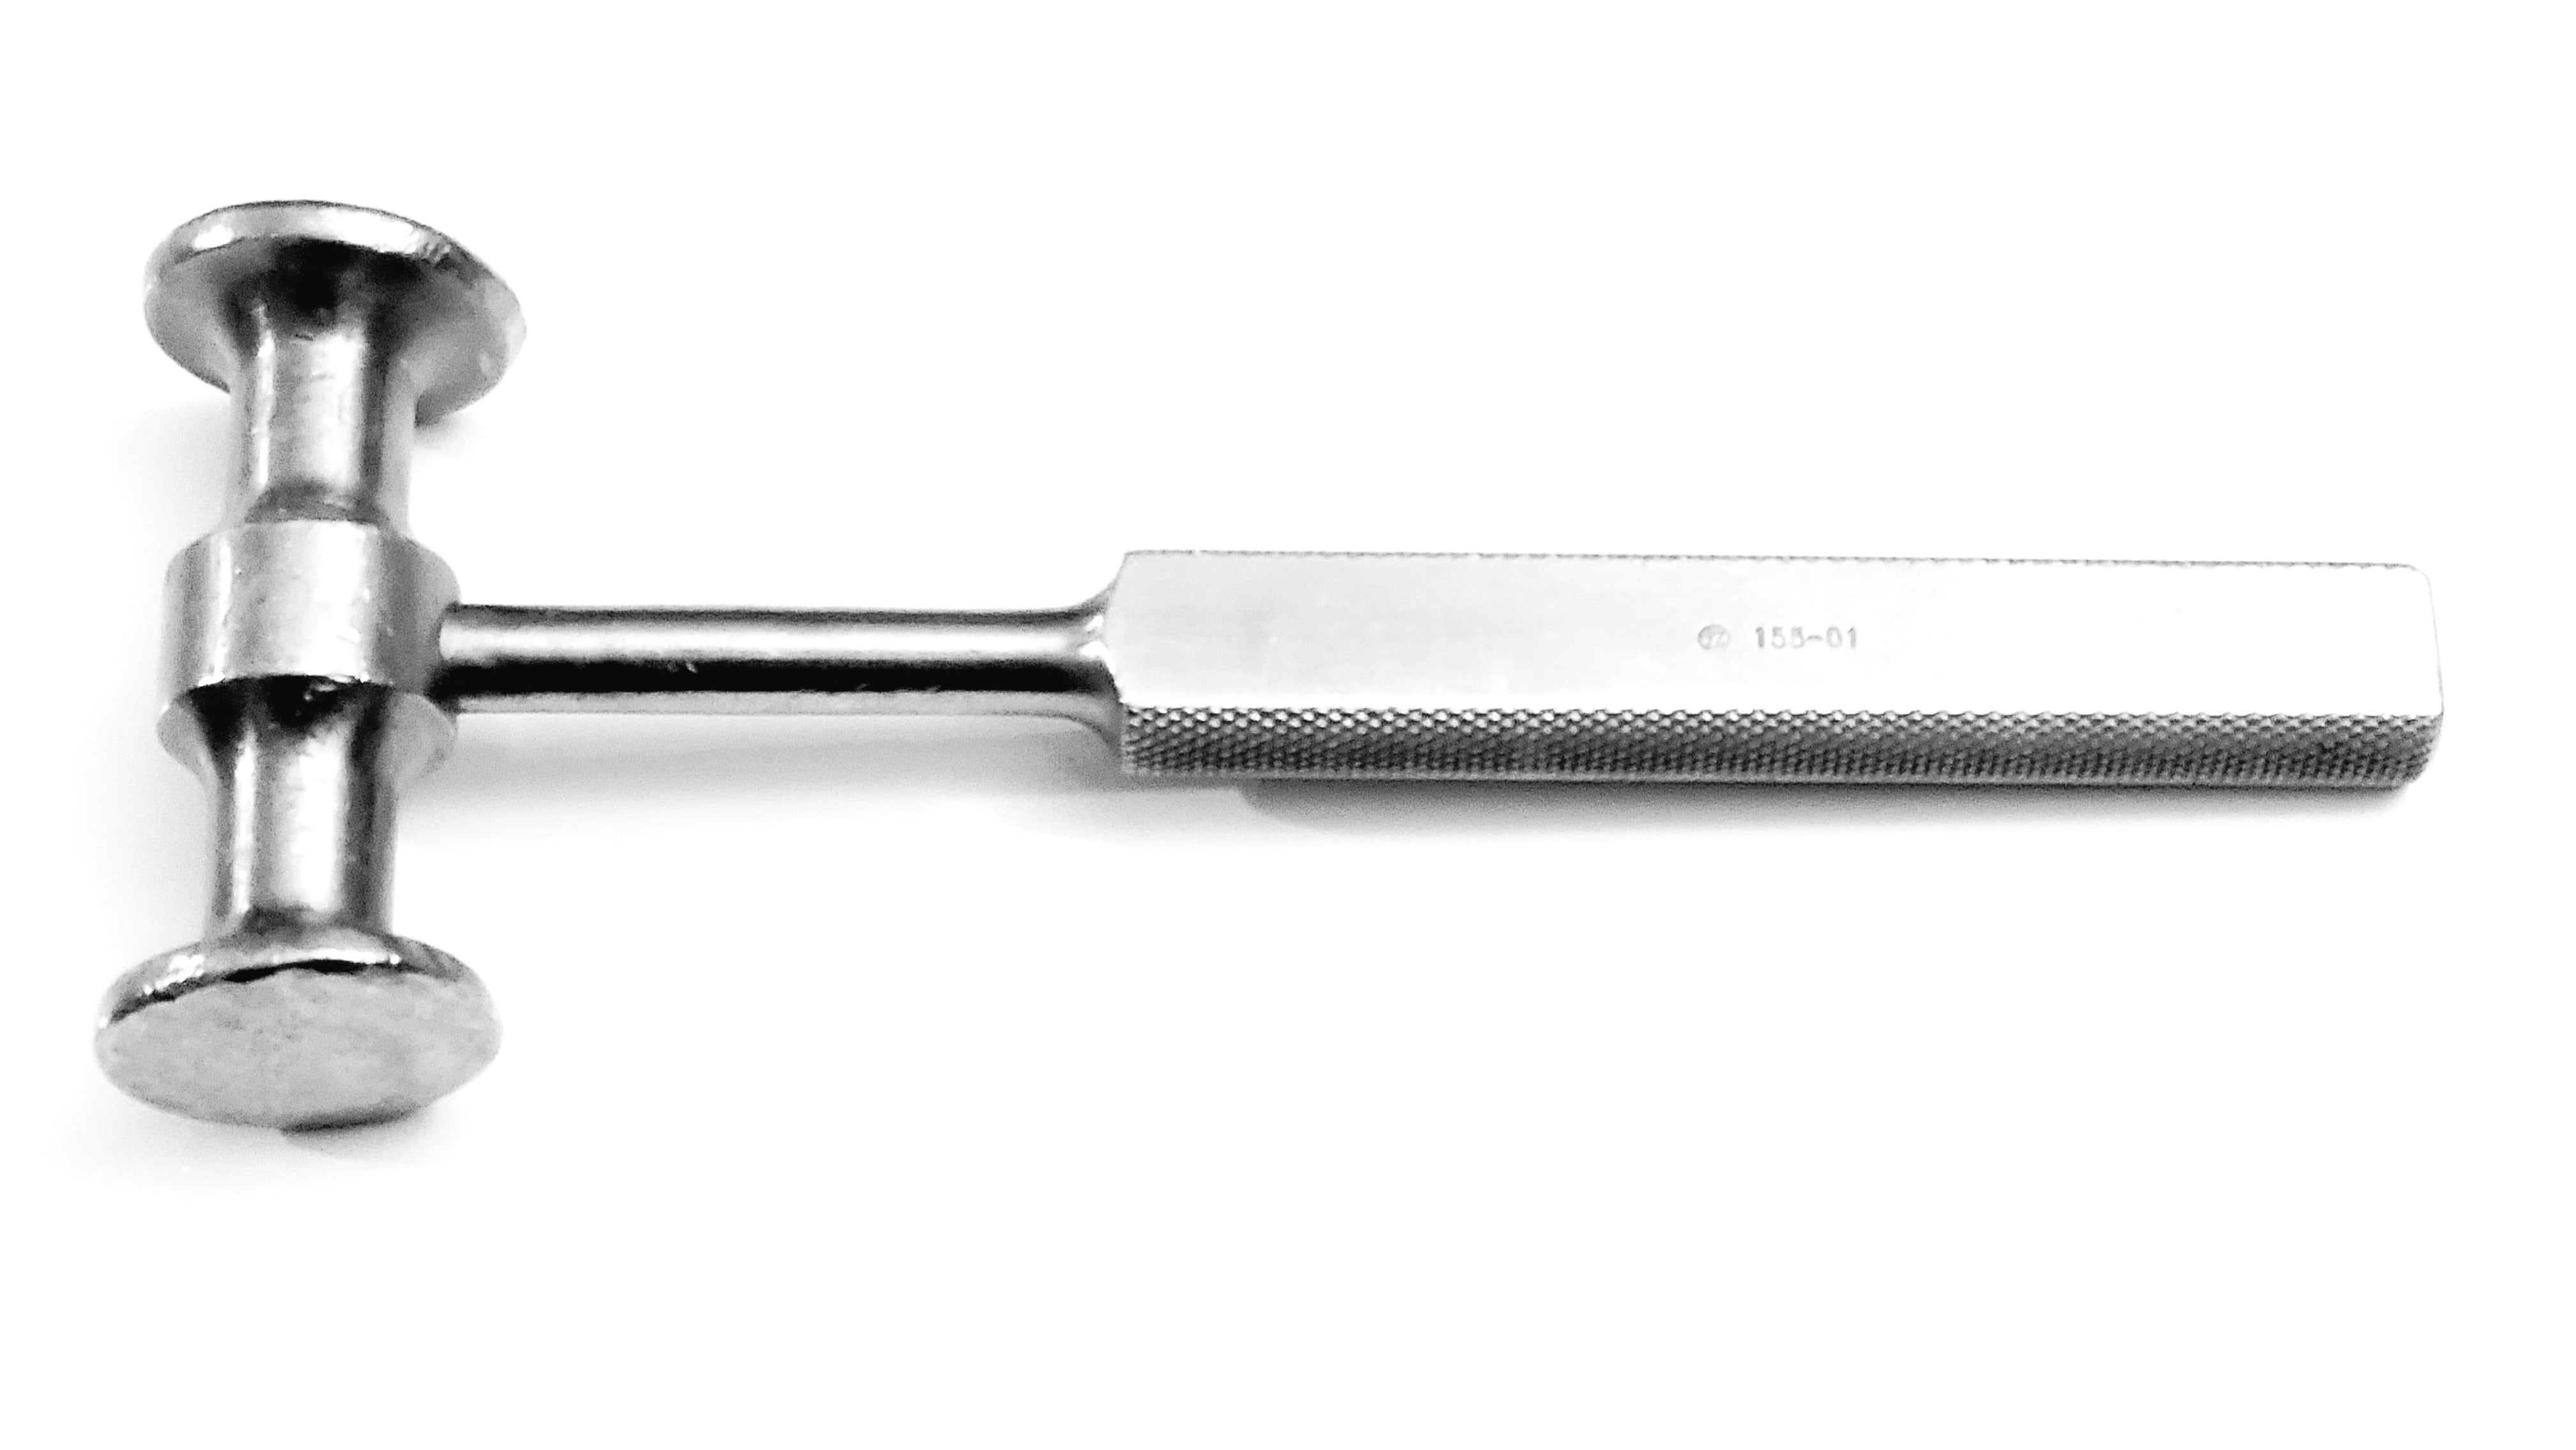 Surgical hammer 155-01 -SAMPLE